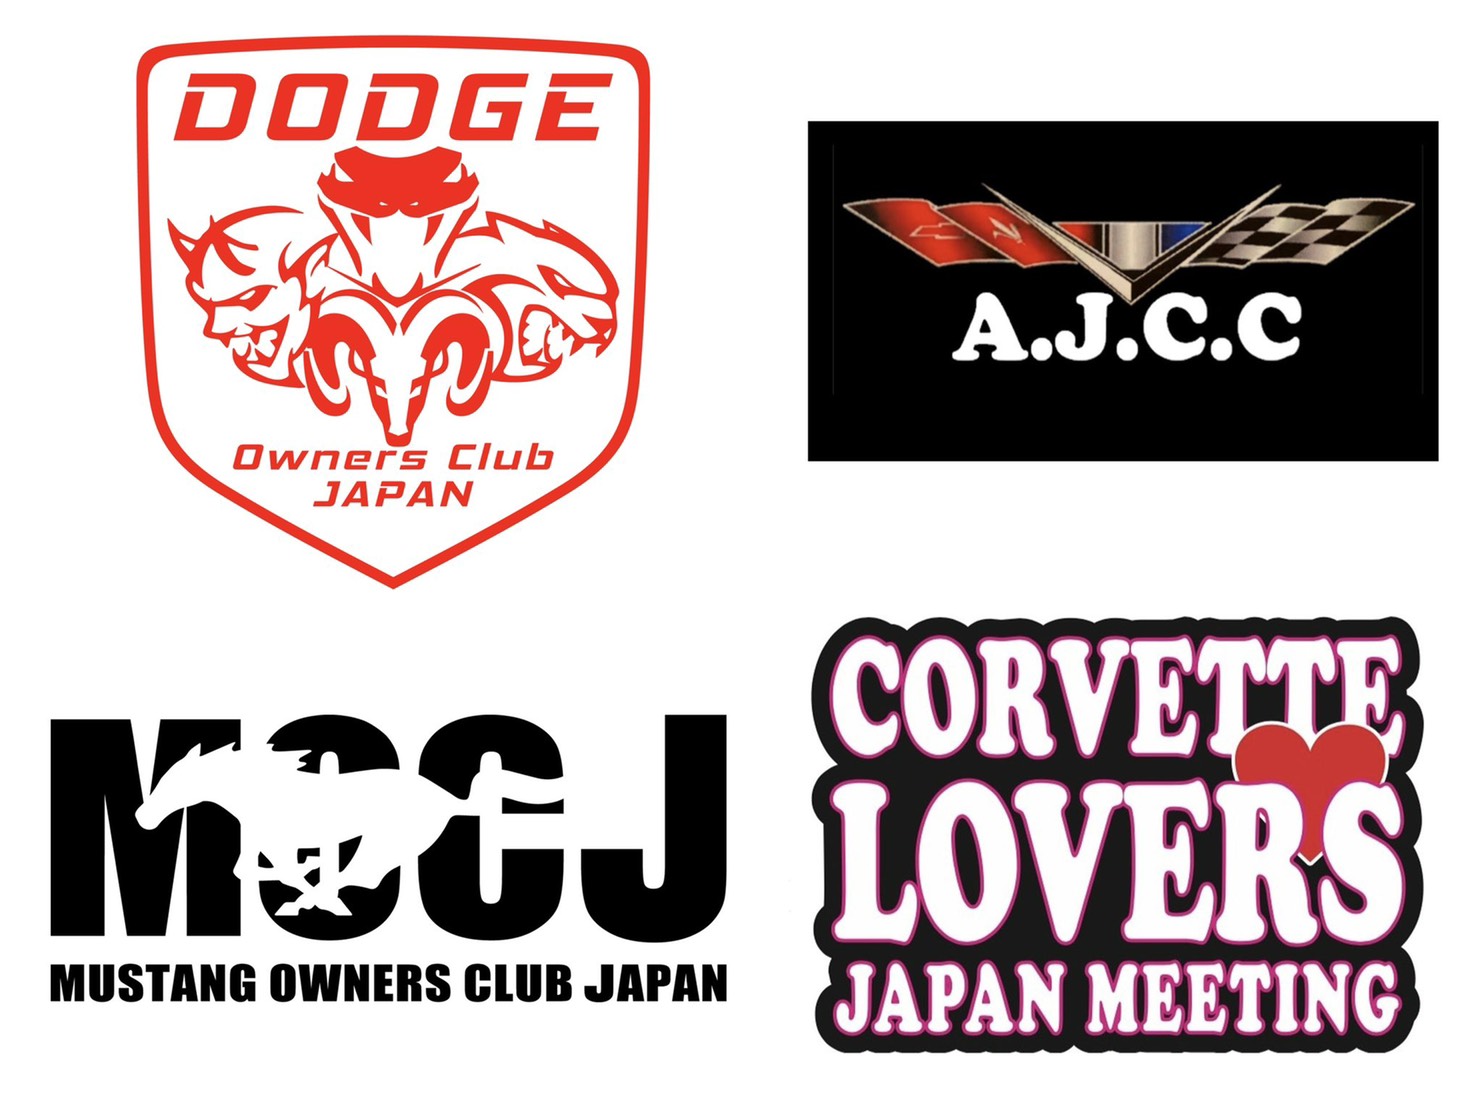 Dodge Owners Club Japan 合同ミーティングやります 21 9 19 高鷲スノーパーク 雨天決行 詳細は後ほどの発表となります Dodge Dodgeownersclubjapan Mustang Mustangownersclubjapan Corvette Corvetteloversjapanmeeting Camaro